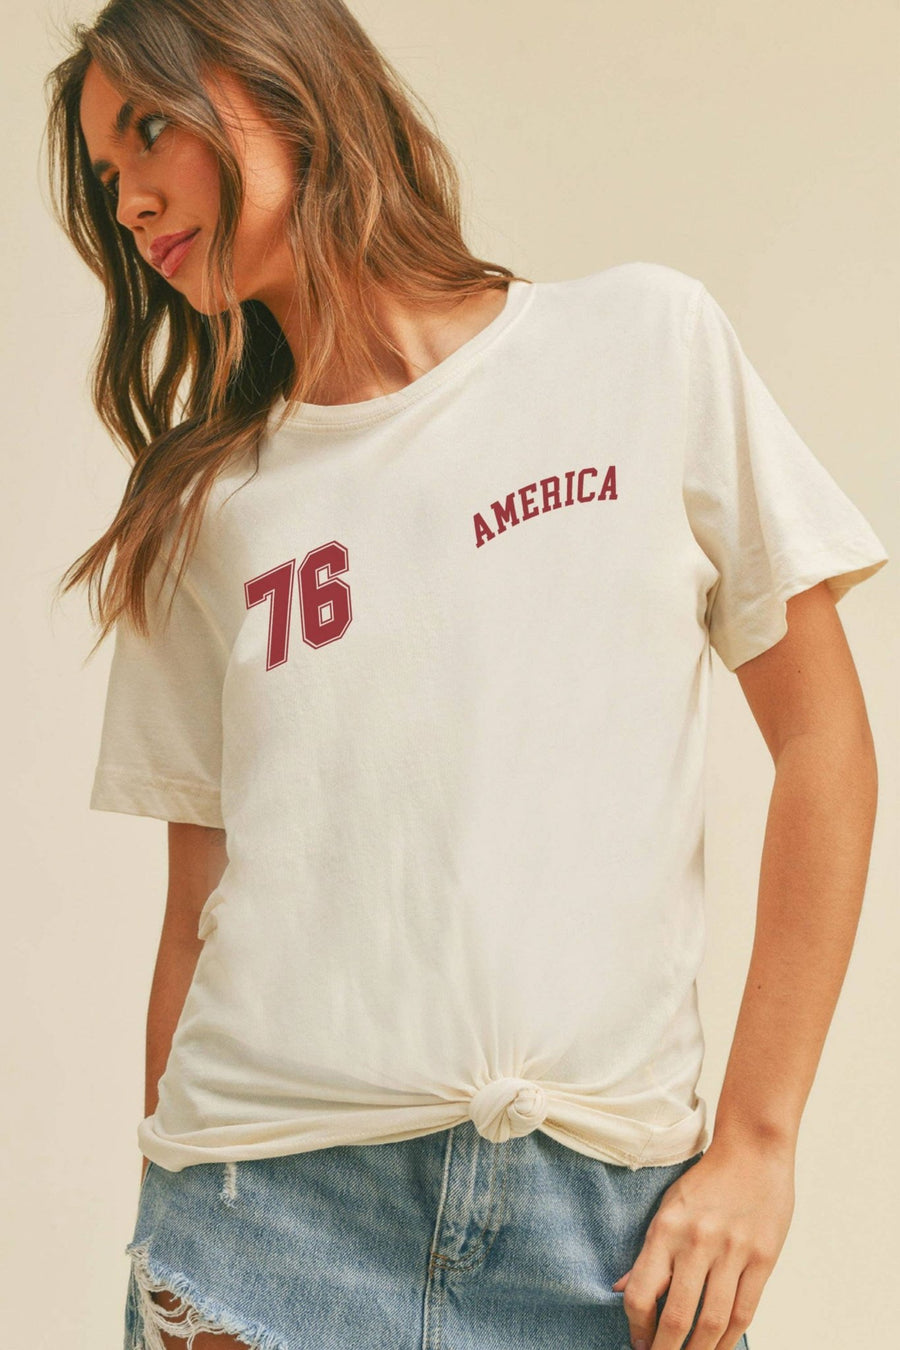 76 America Graphic Tee